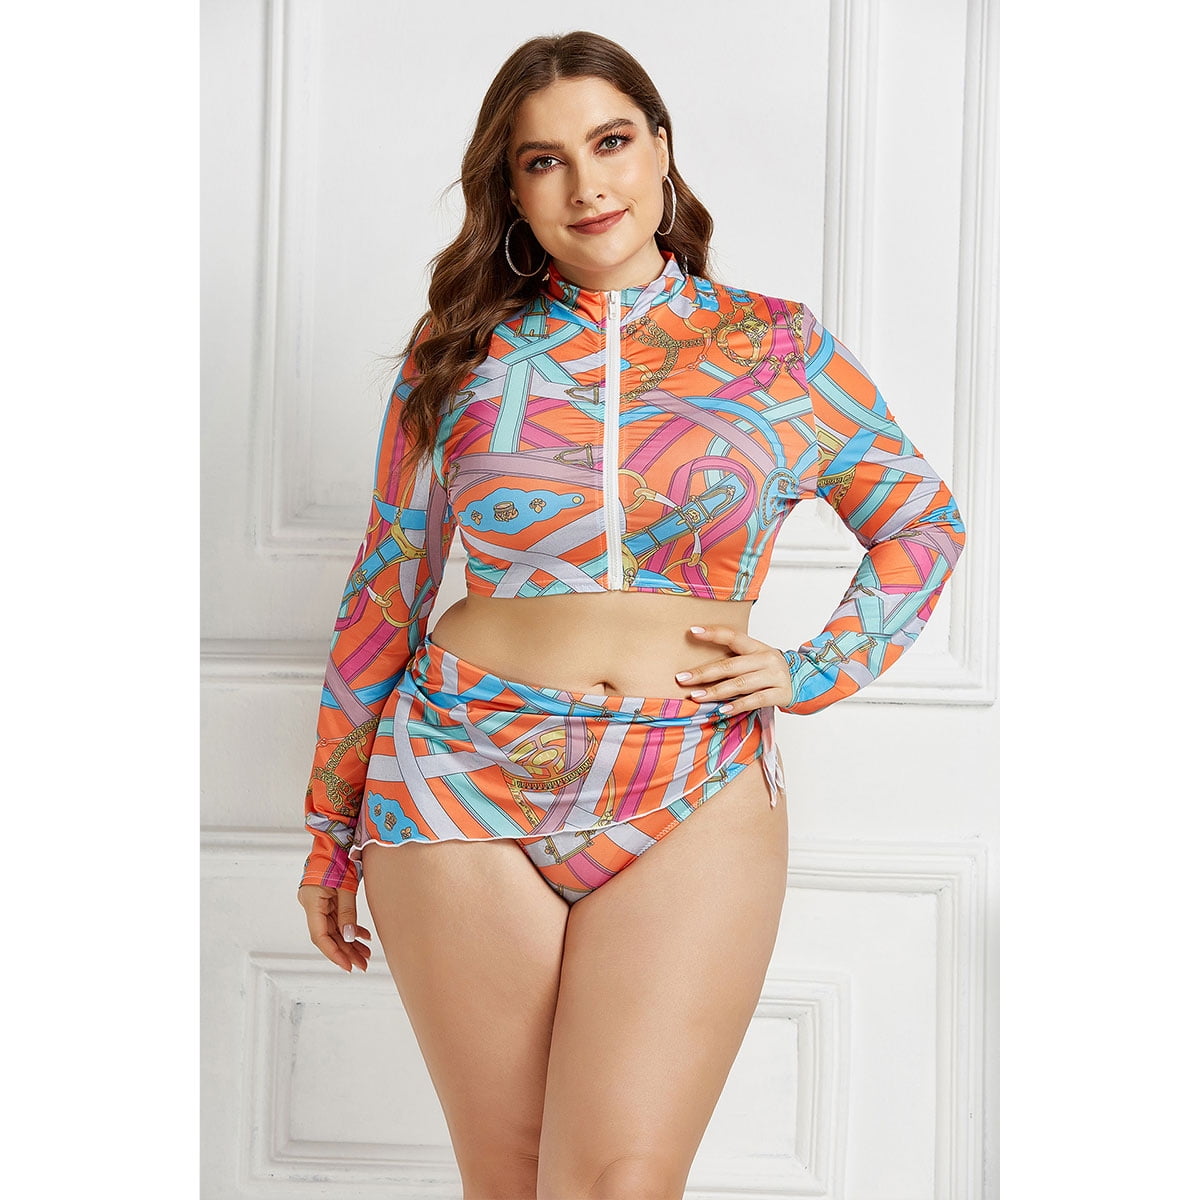 HAWEE 3 Piece Swimsuit for Women Plus Size High Waist Print Split